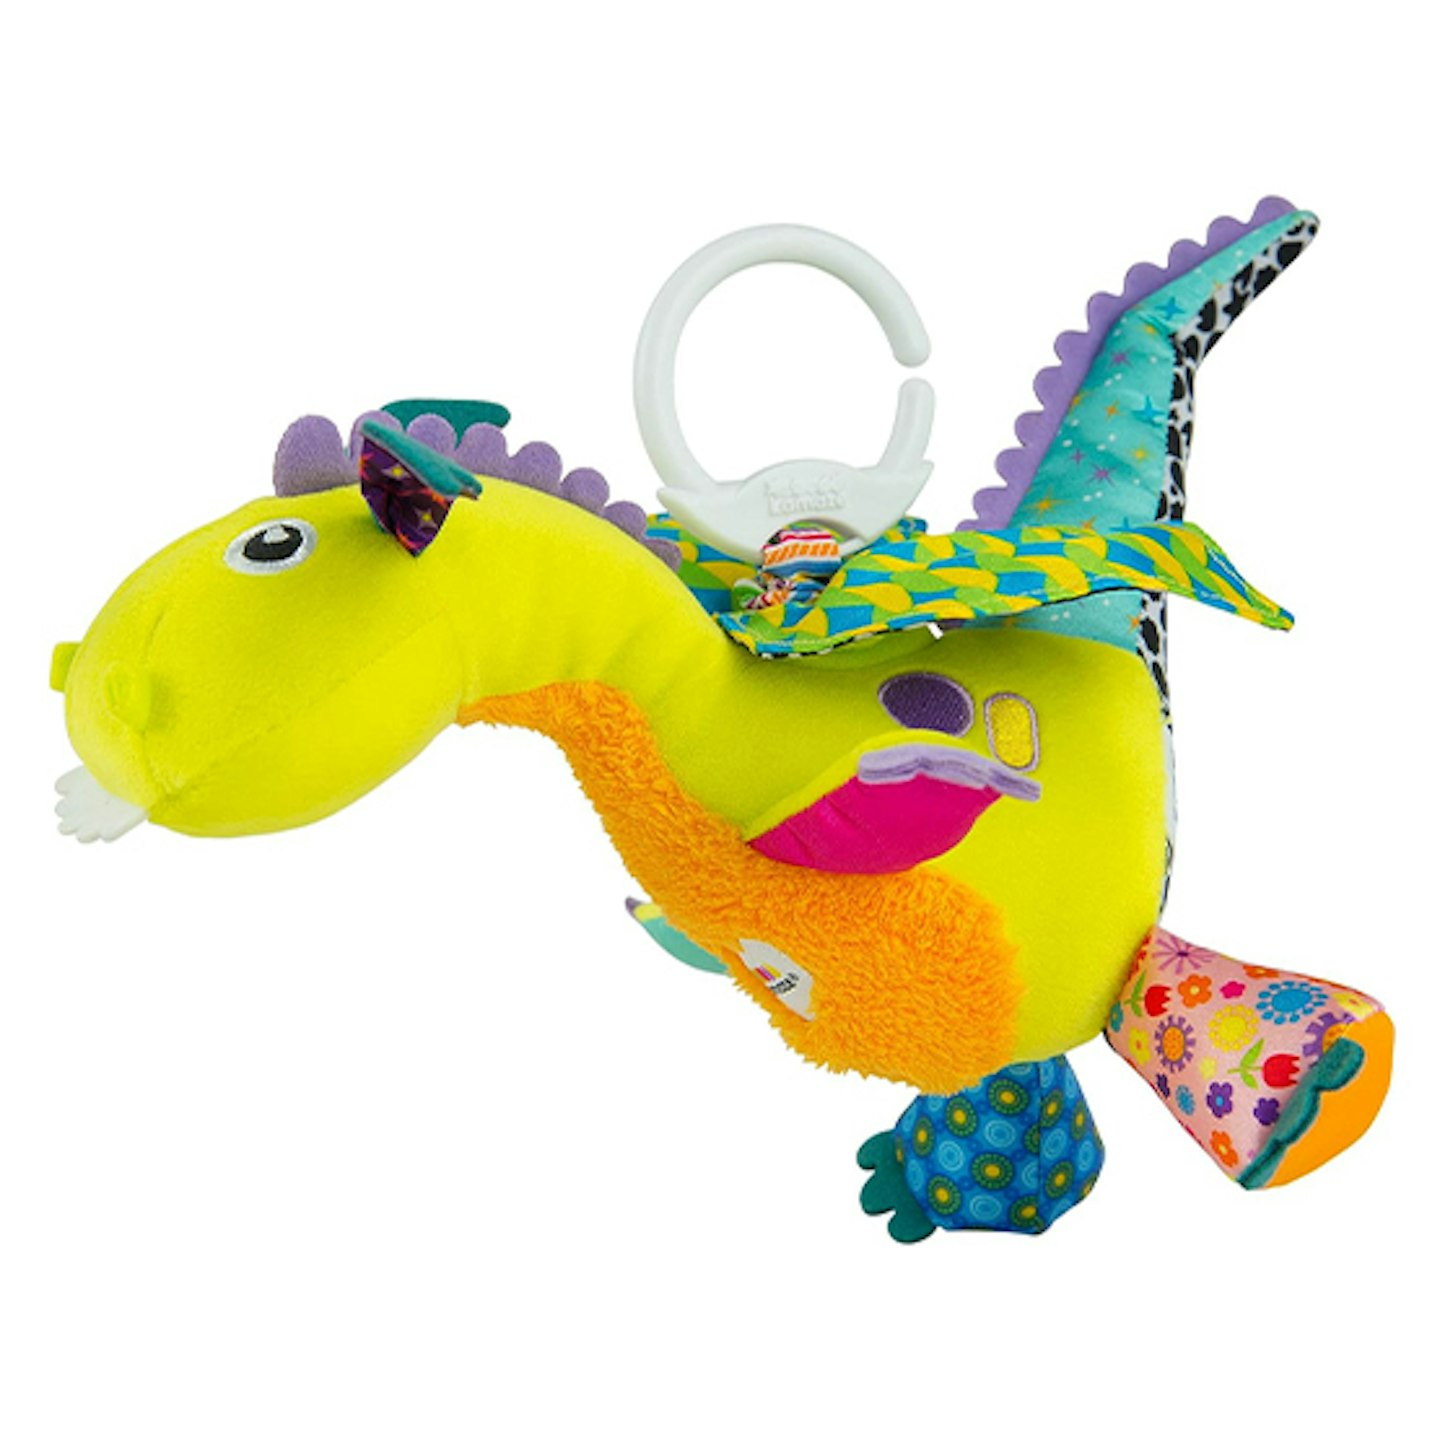 Flip flap dragon pram toy